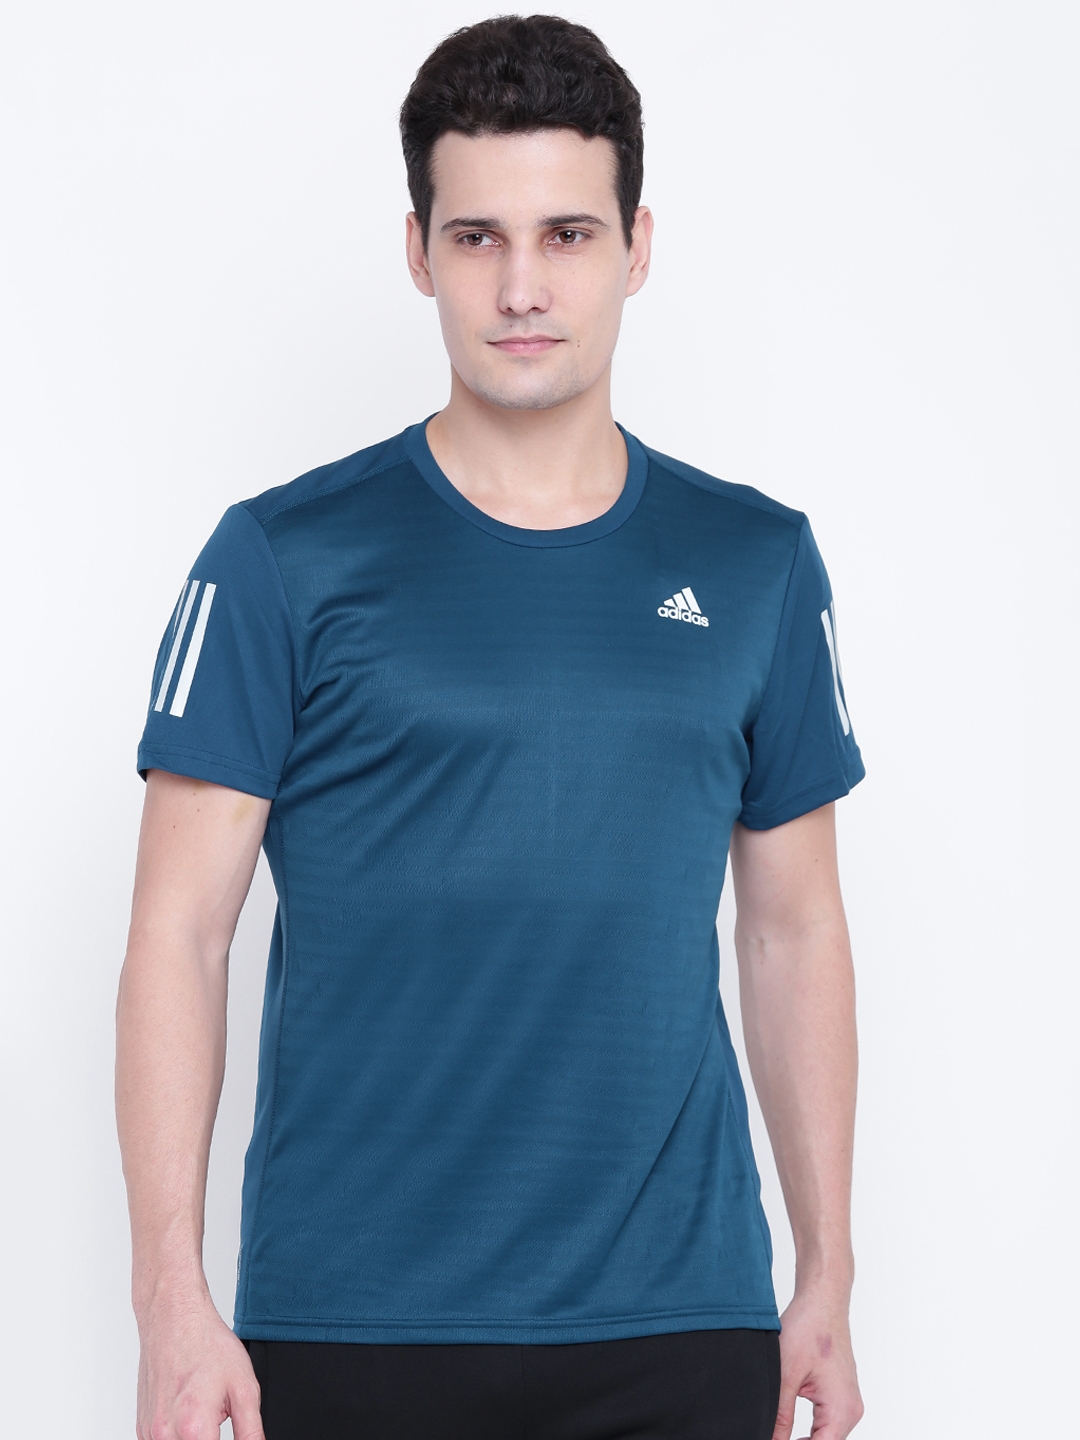 Buy ADIDAS Men Teal Blue Running Response Design Round Running T Shirt - for Men 2084258 |